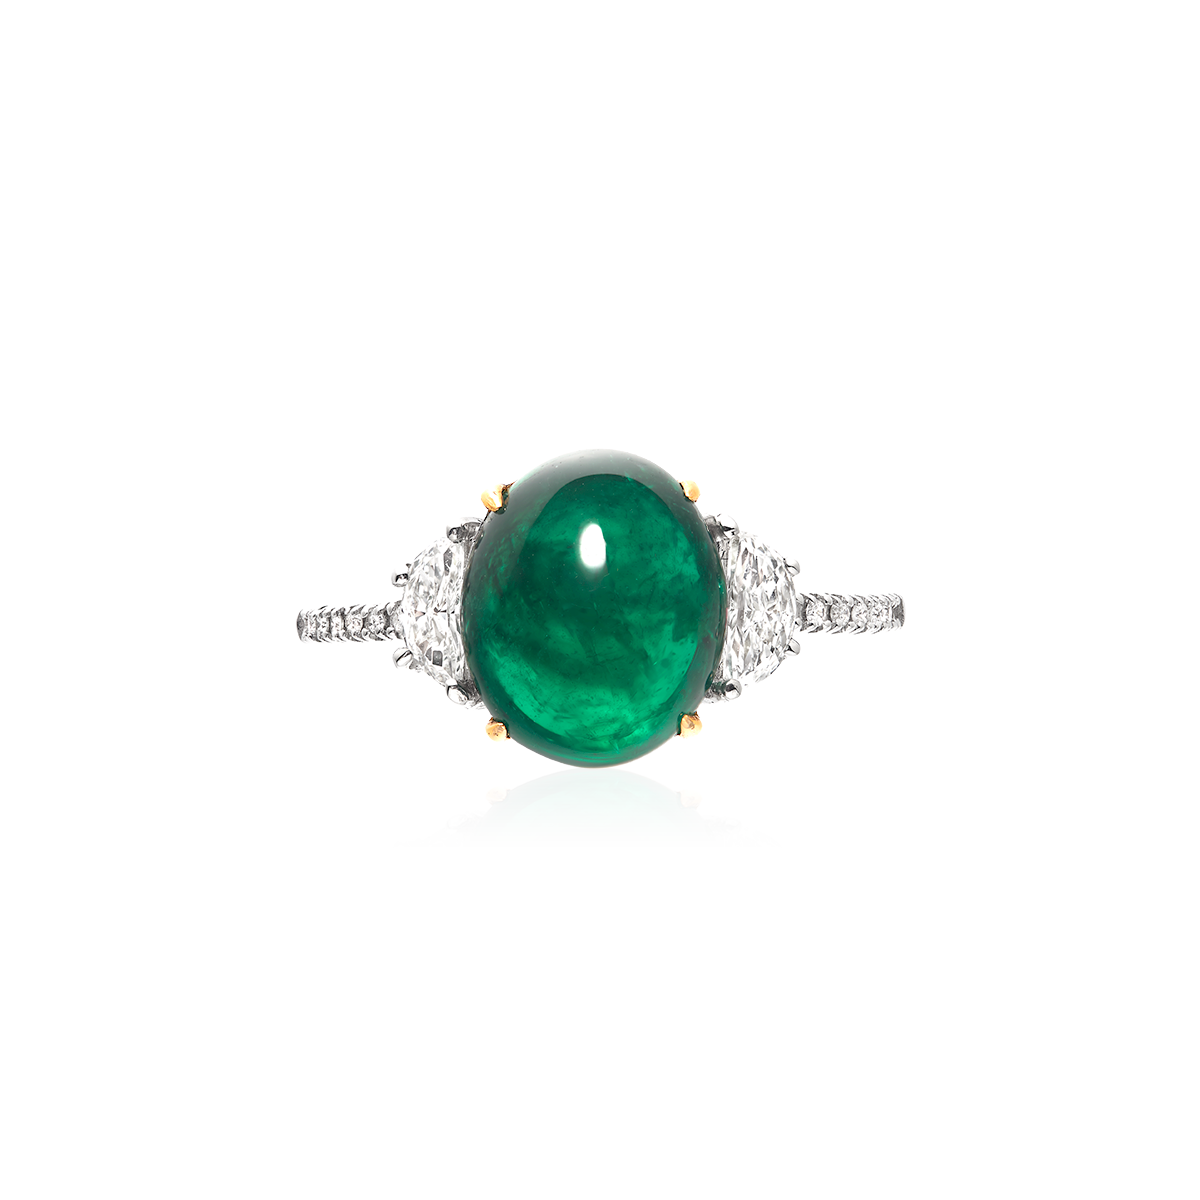 4.80克拉 蛋面祖母綠鑽戒
Cabochon Emerald and 
Diamond Ring